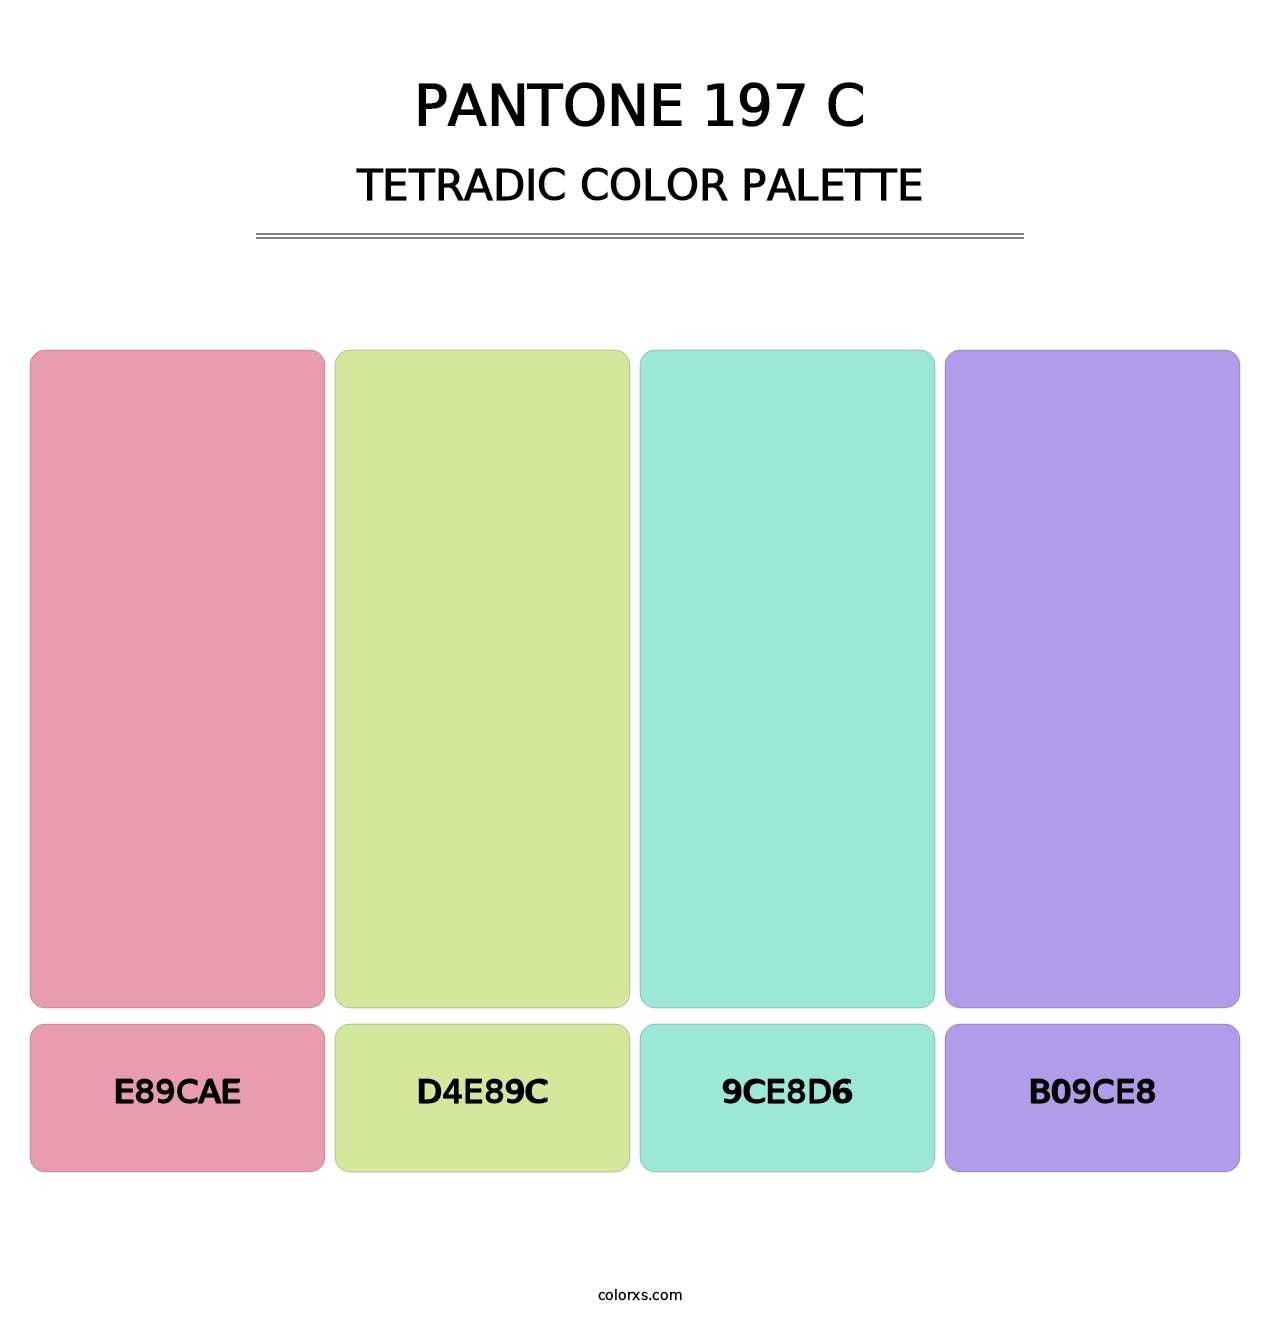 PANTONE 197 C - Tetradic Color Palette